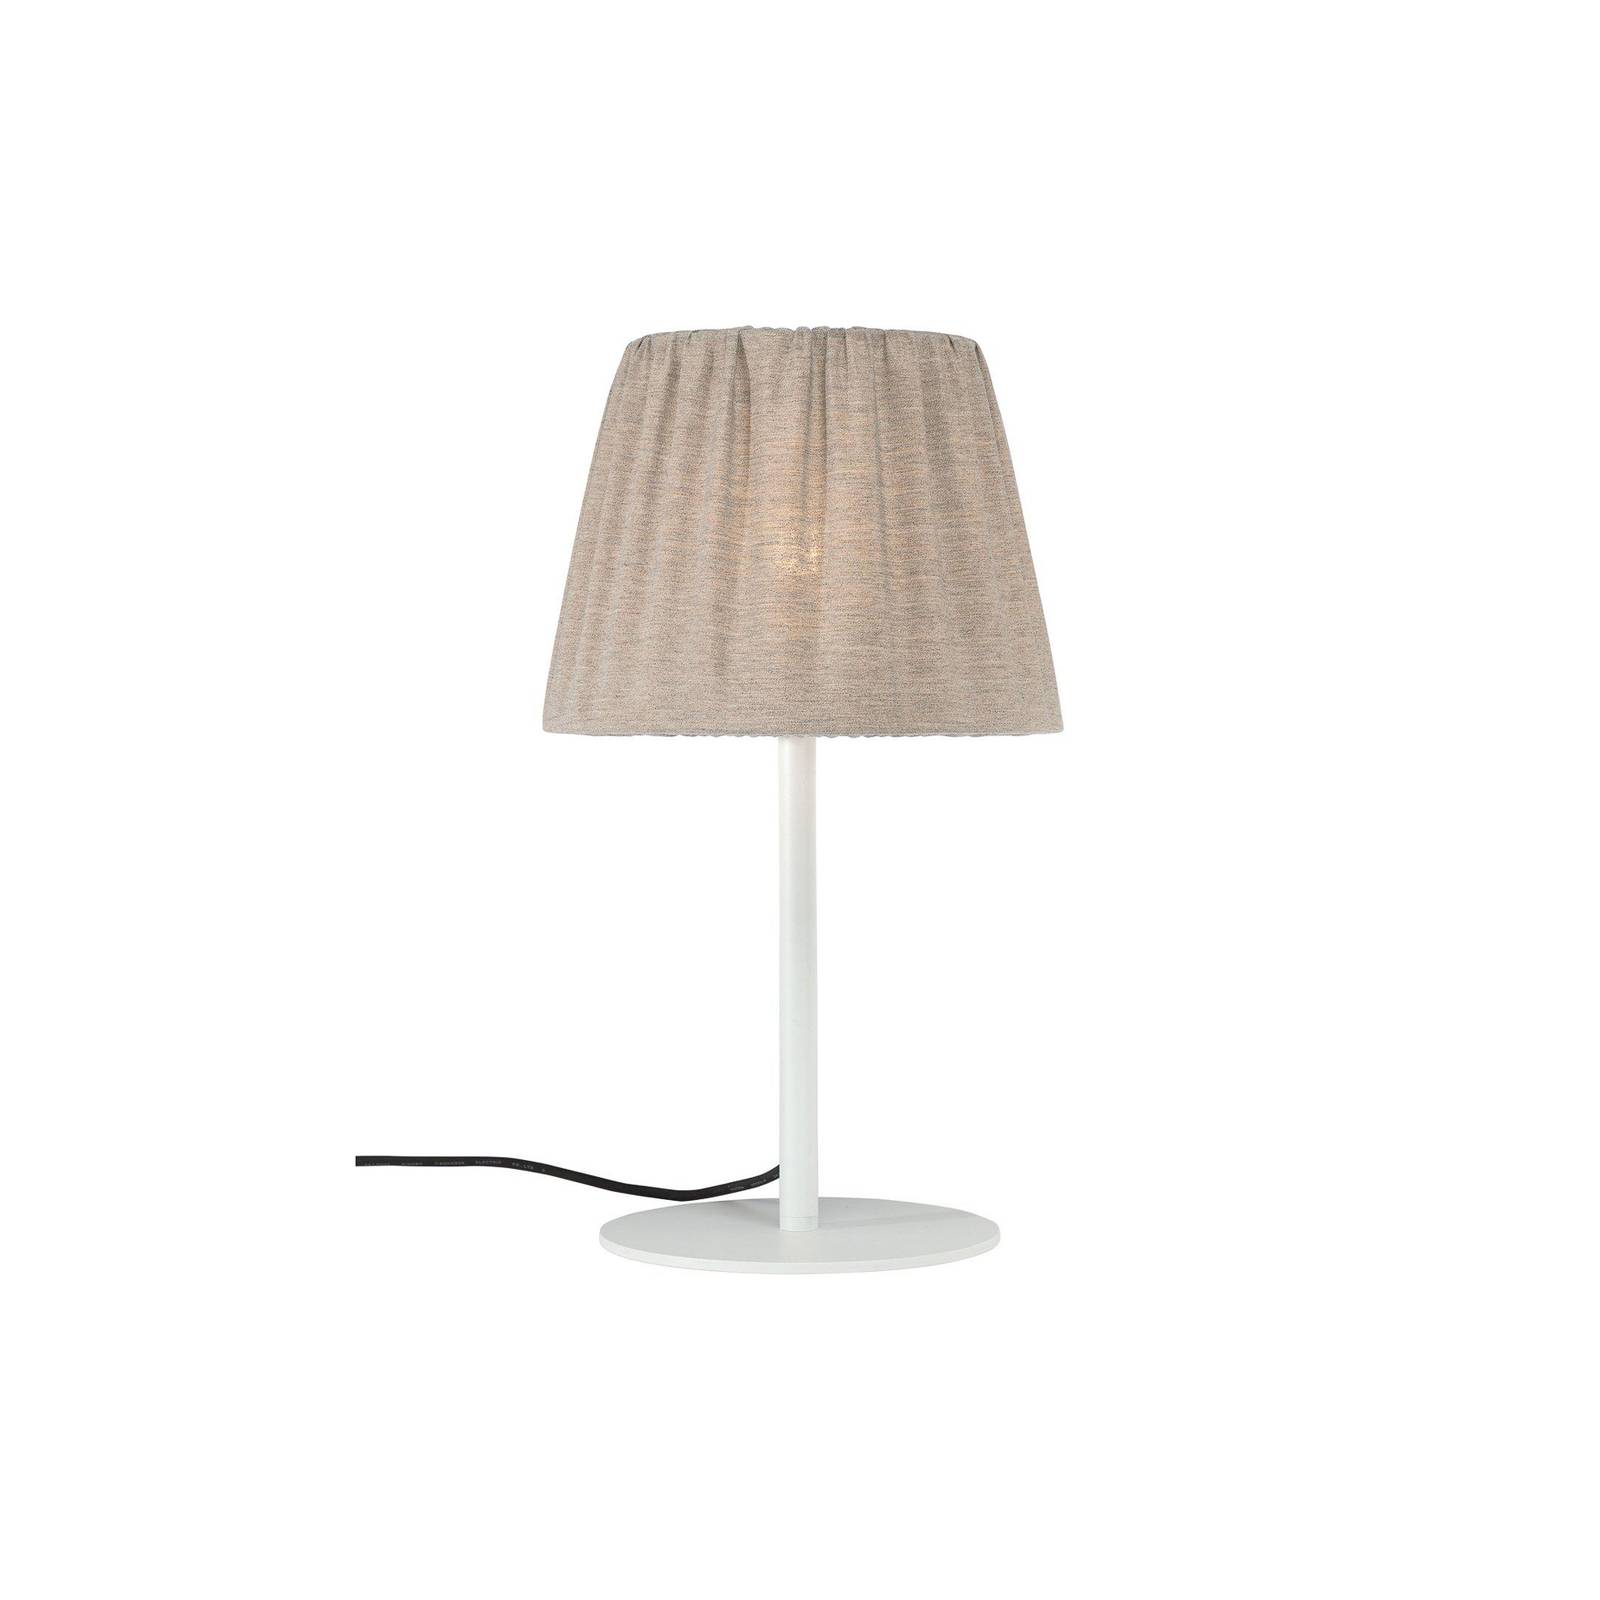 PR Home bordslampa Agnar för utomhusbruk vit/brun 57 cm